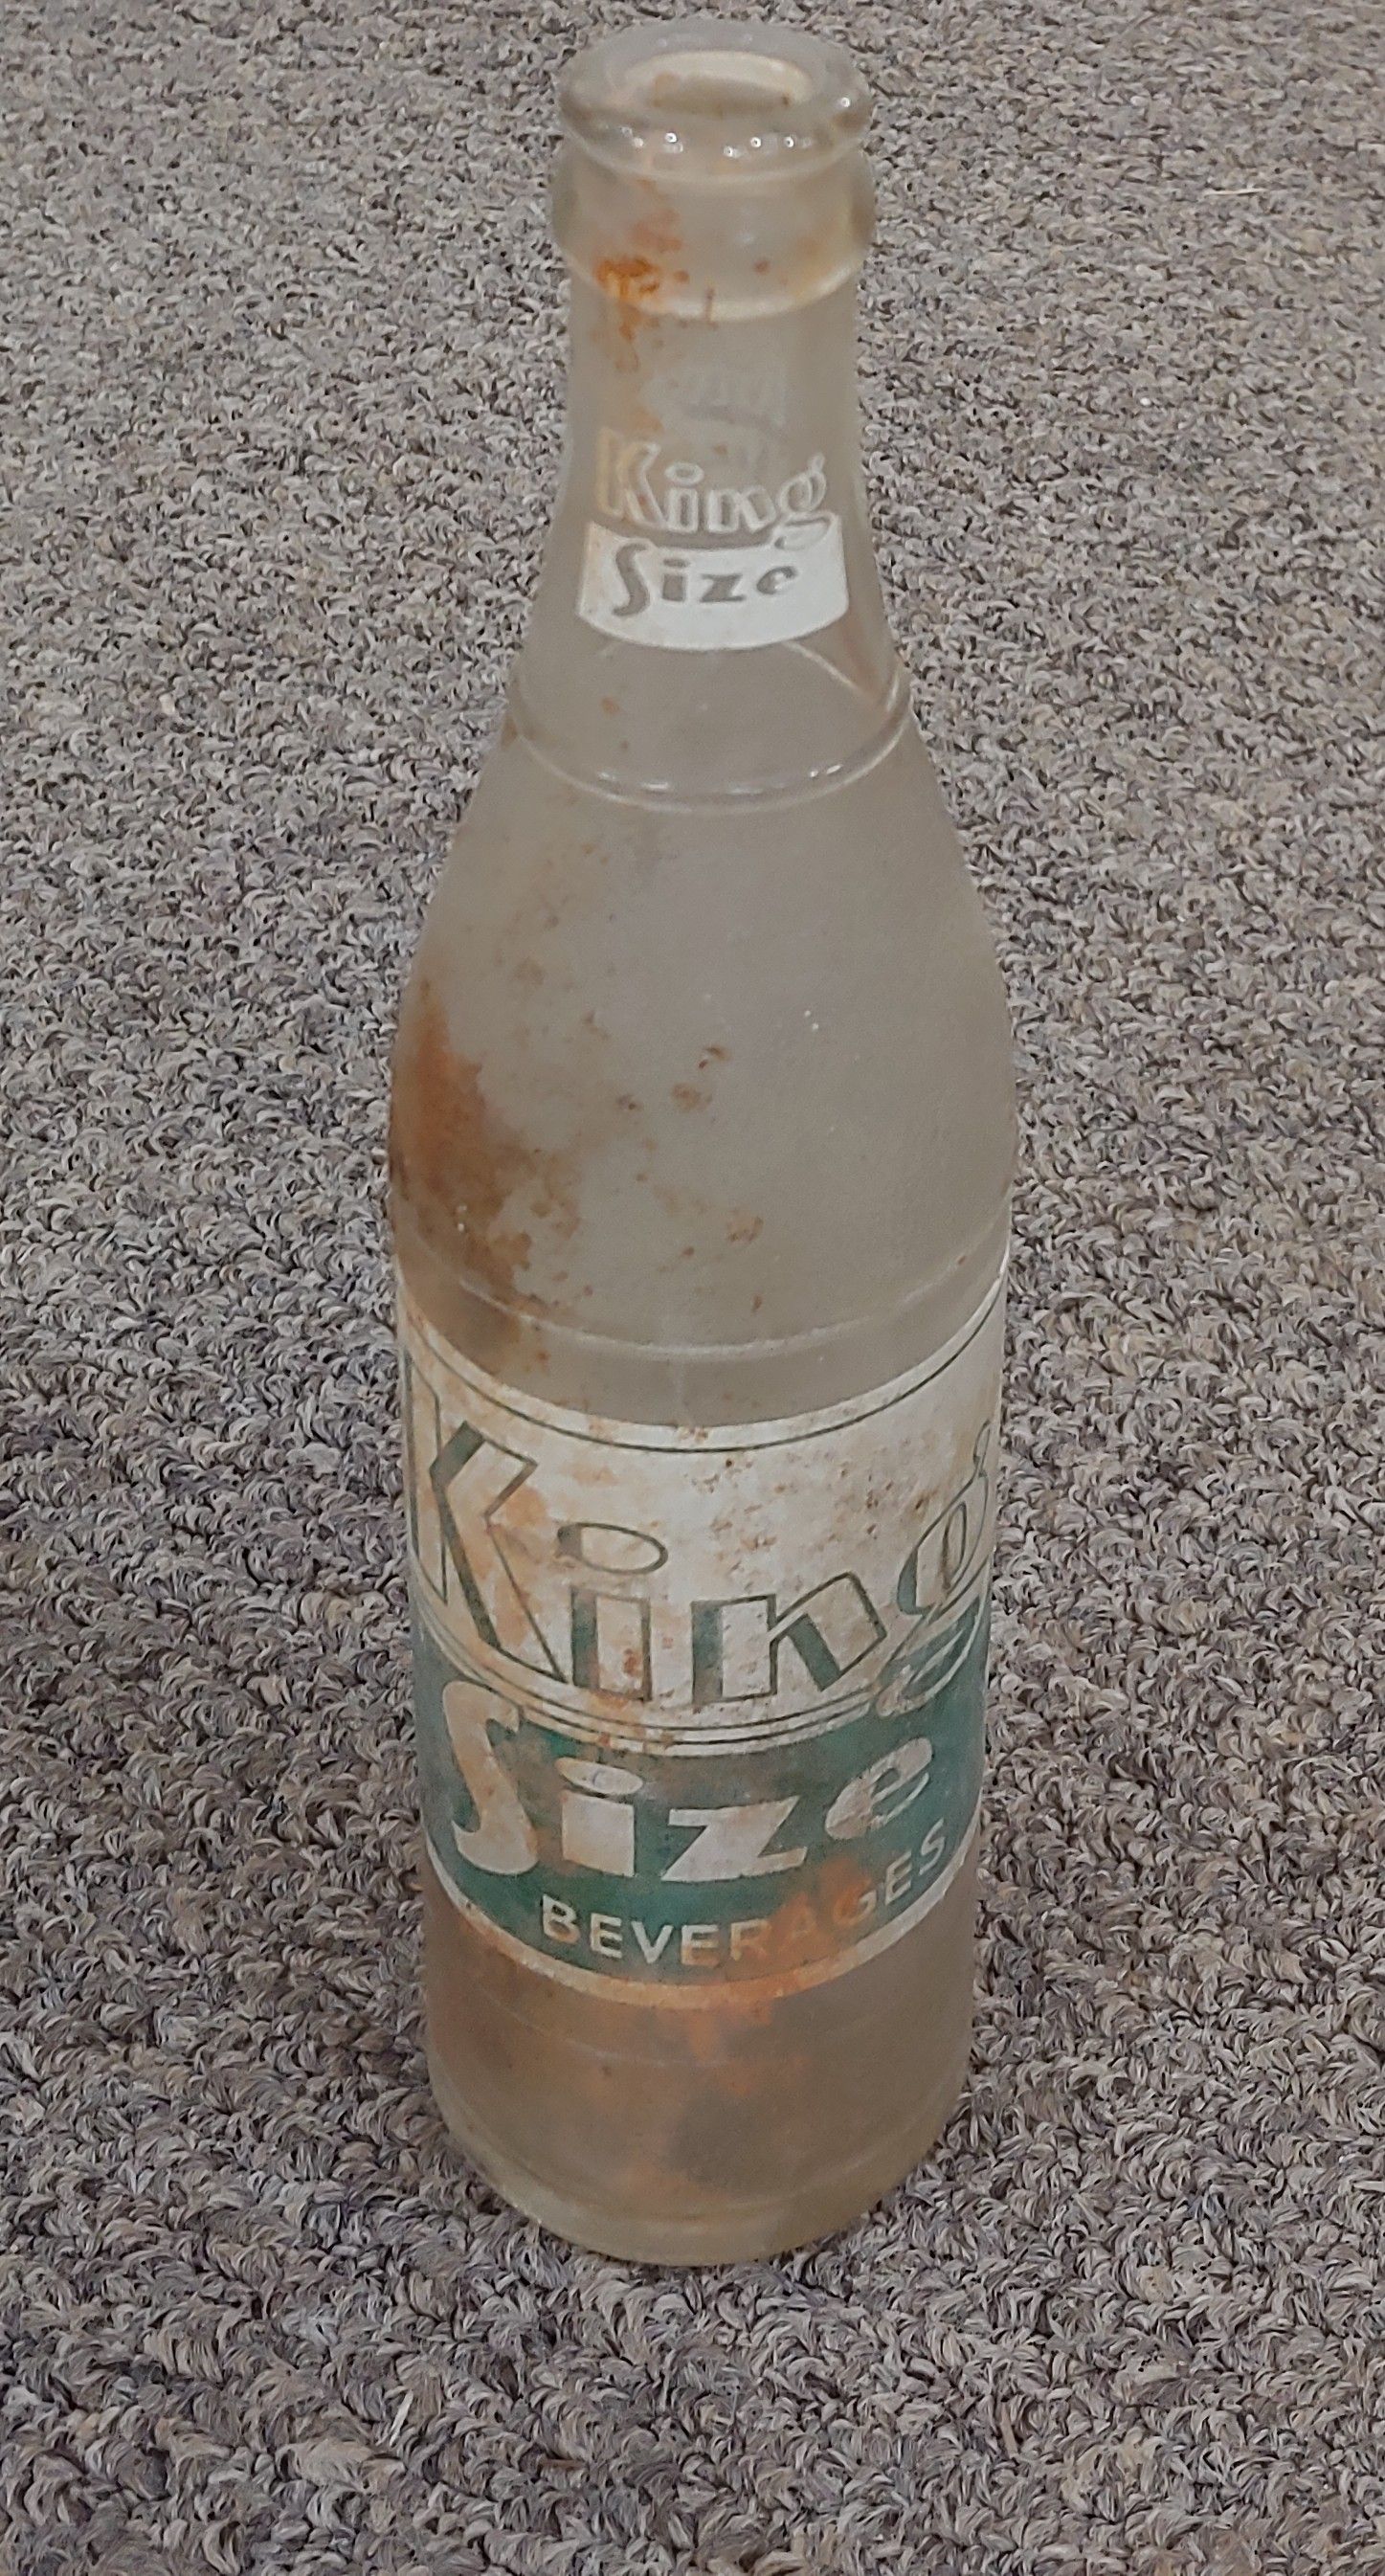 Antique King Size Bottle